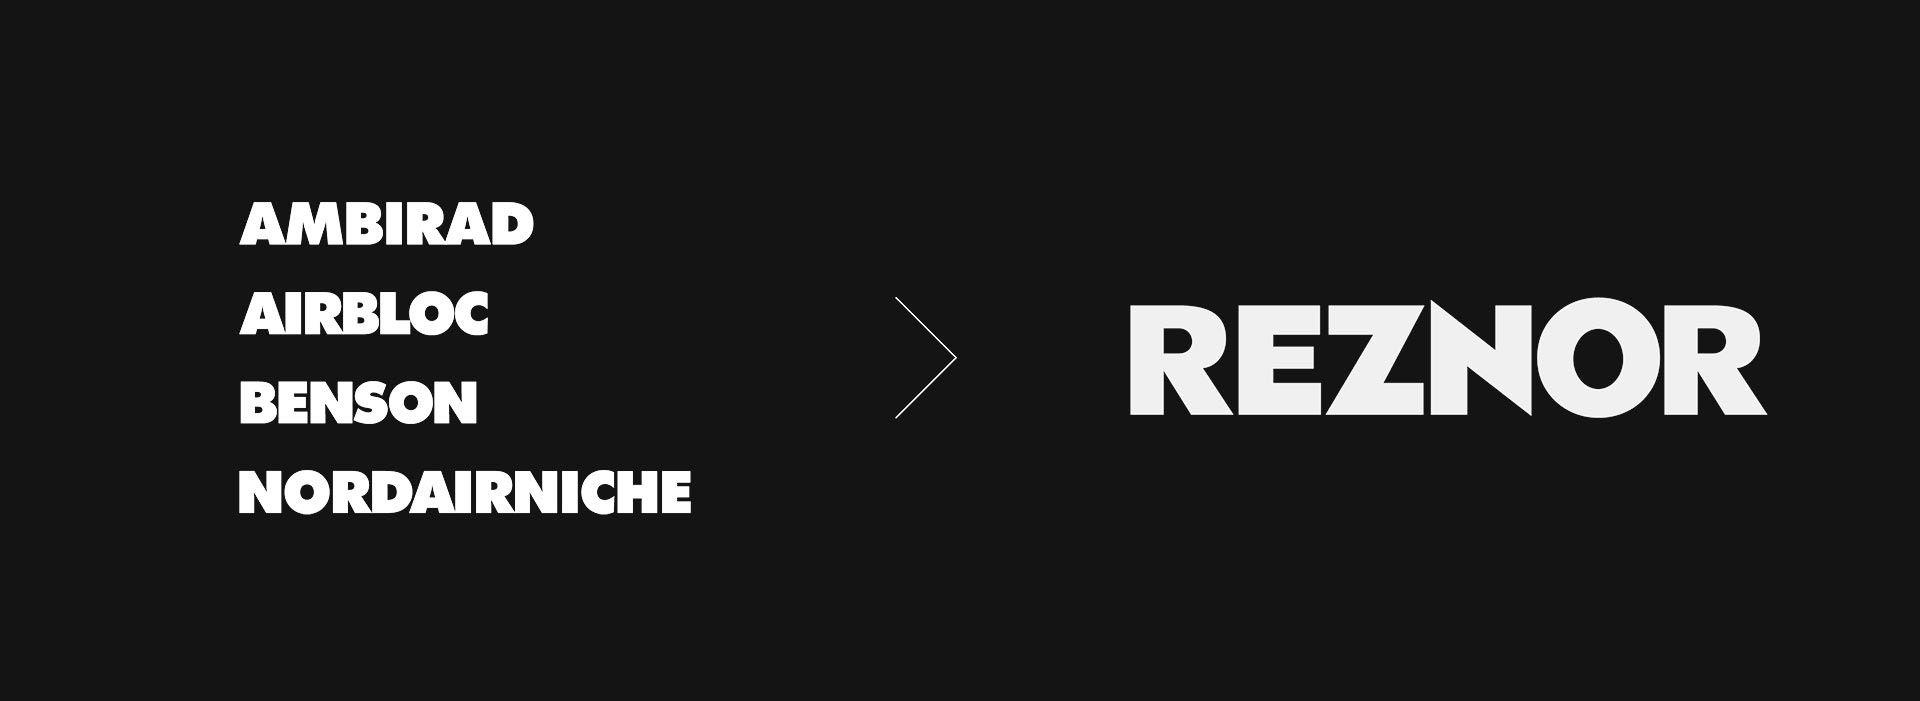 Reznor Logo - Callum Bedward - Brand Identity & Logo Design - Reznor's Next Step